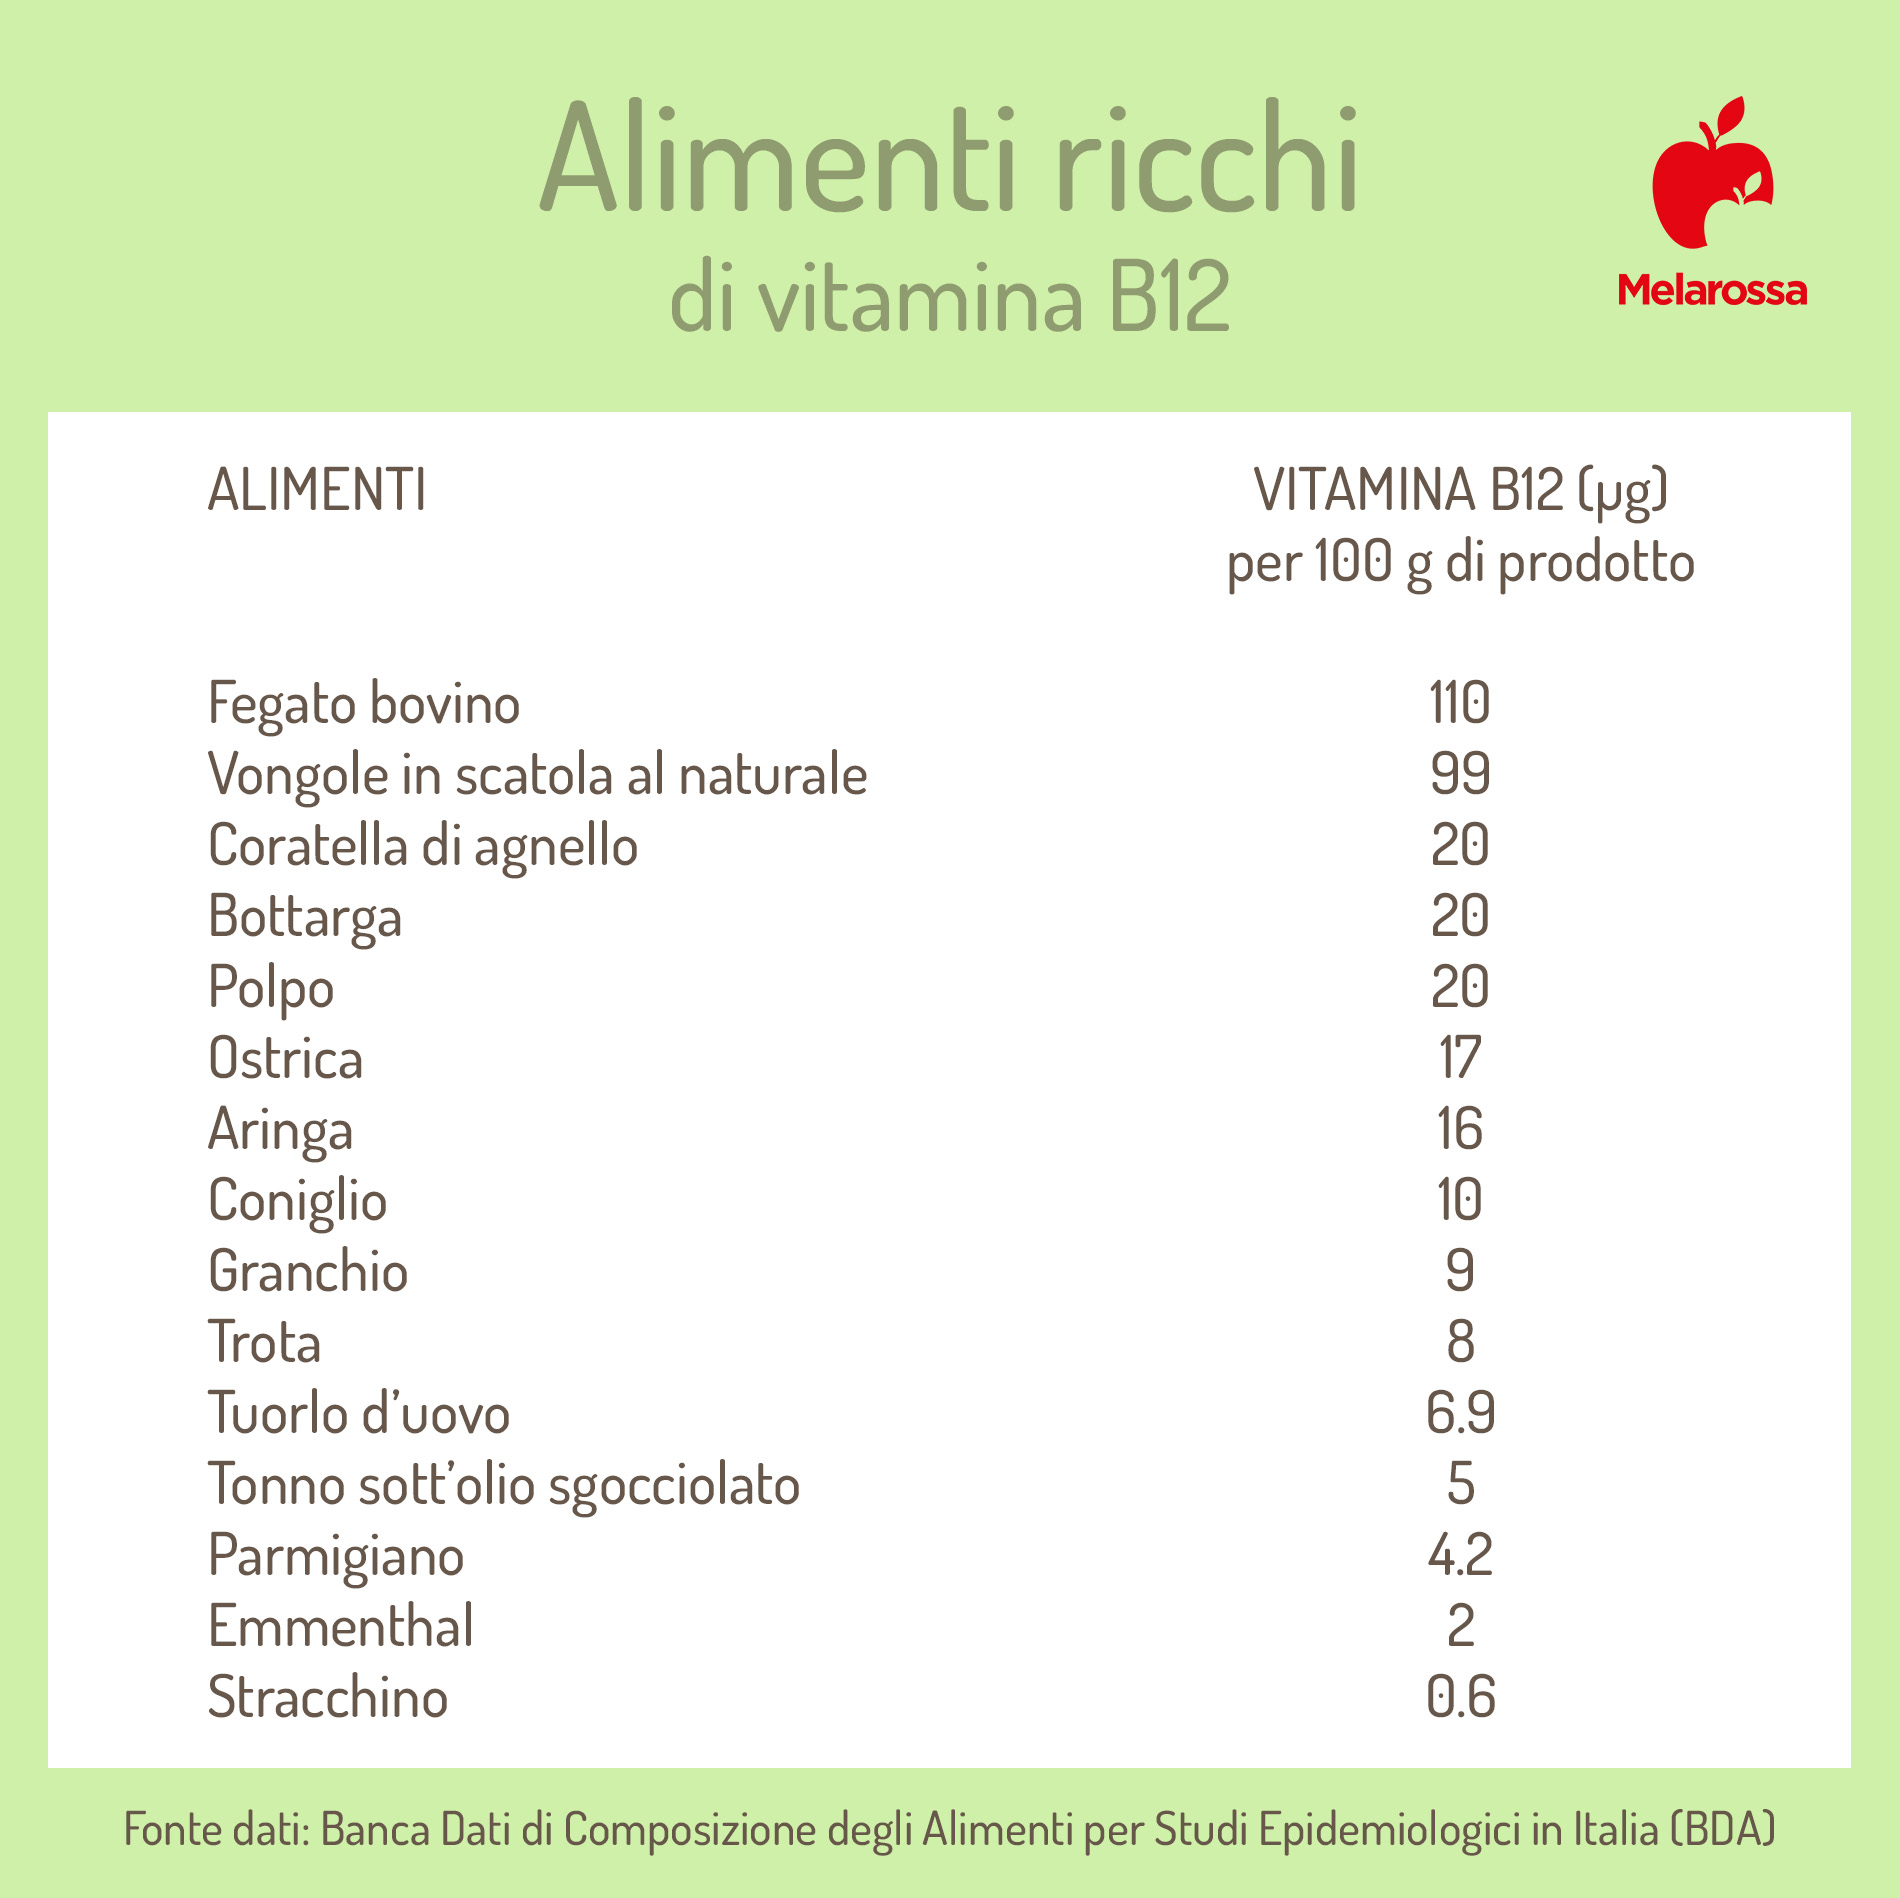 Alimenti ricchi di vitamina B12